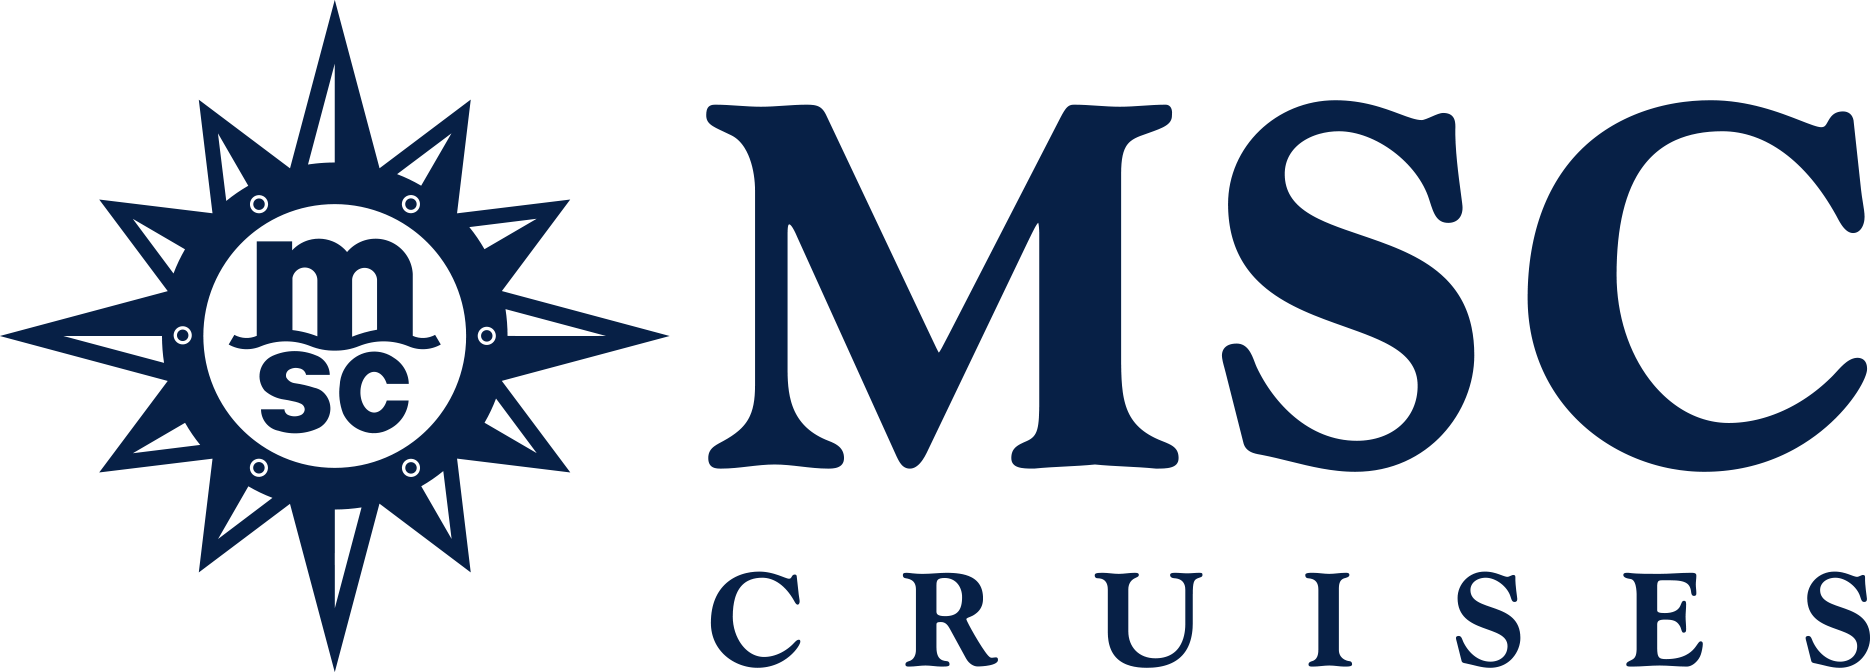 MSC Magnifica Reederei Logo